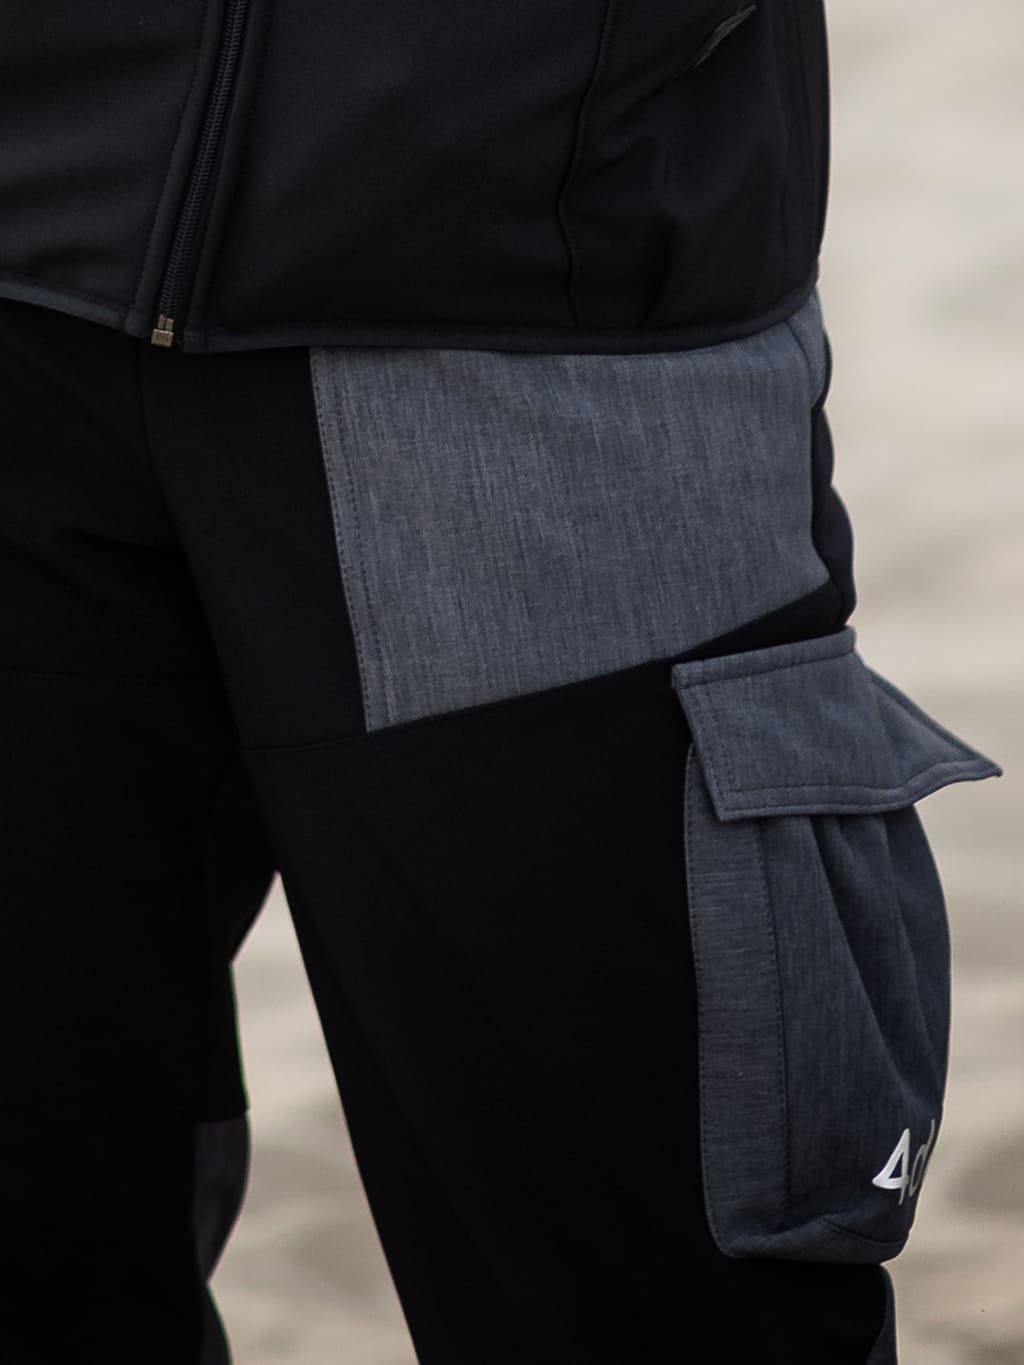 Men's winter training pants - customized